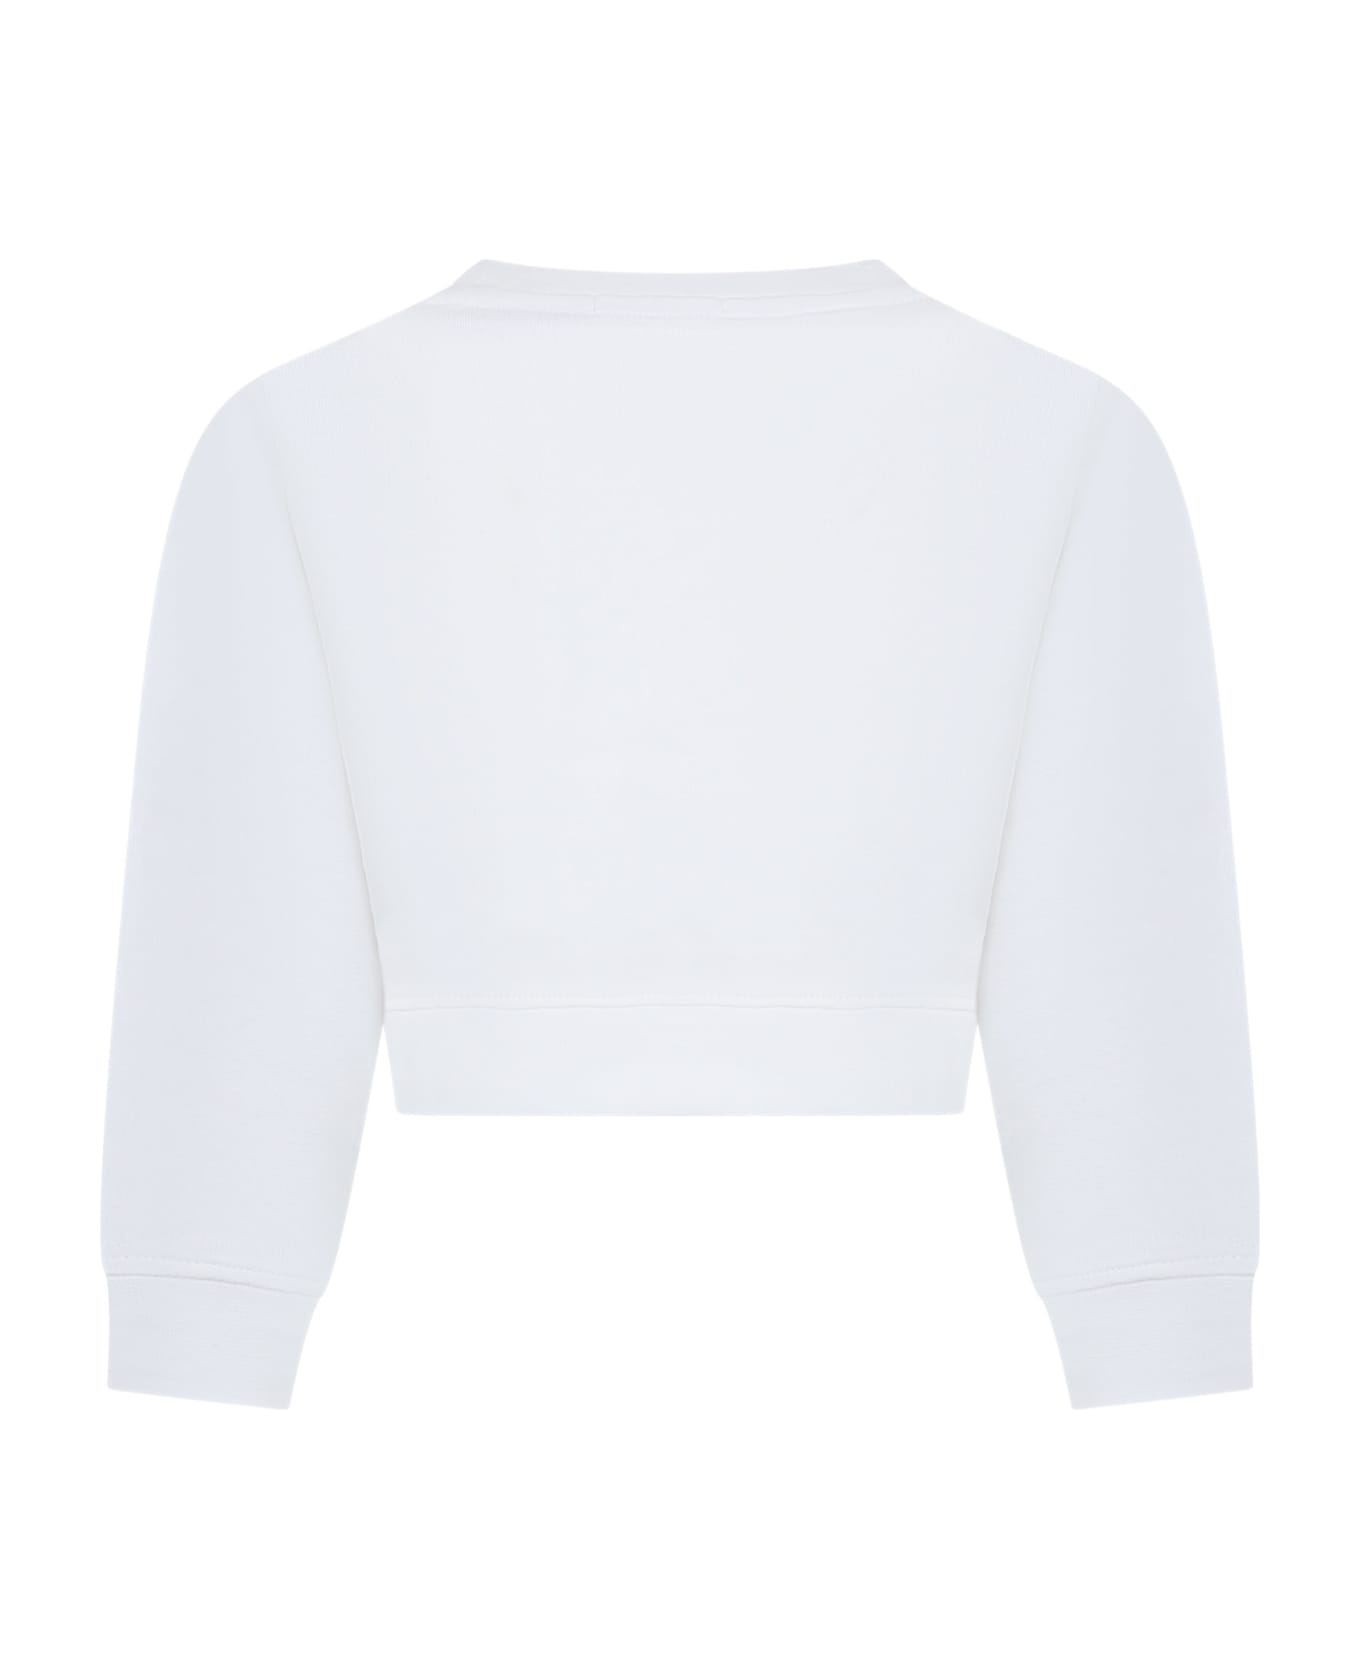 Stella McCartney Kids White Sweatshirt For Girl With Multicolor Logo - White